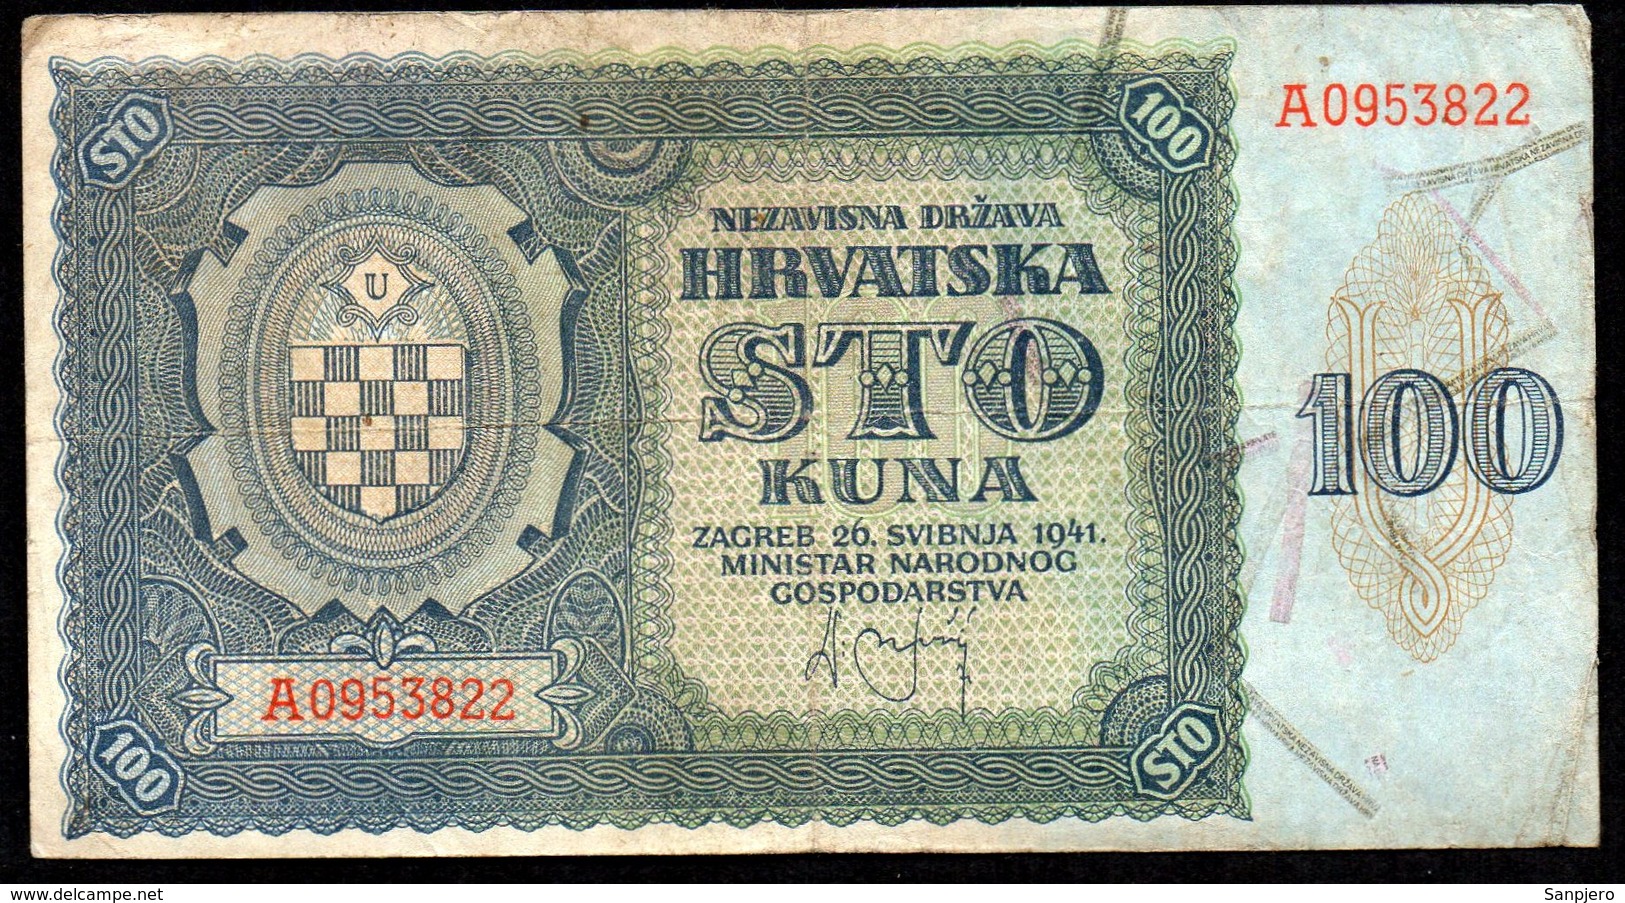 CROATIA NDH 1941. 100 Kuna / WAR BANKNOTE - Croatia